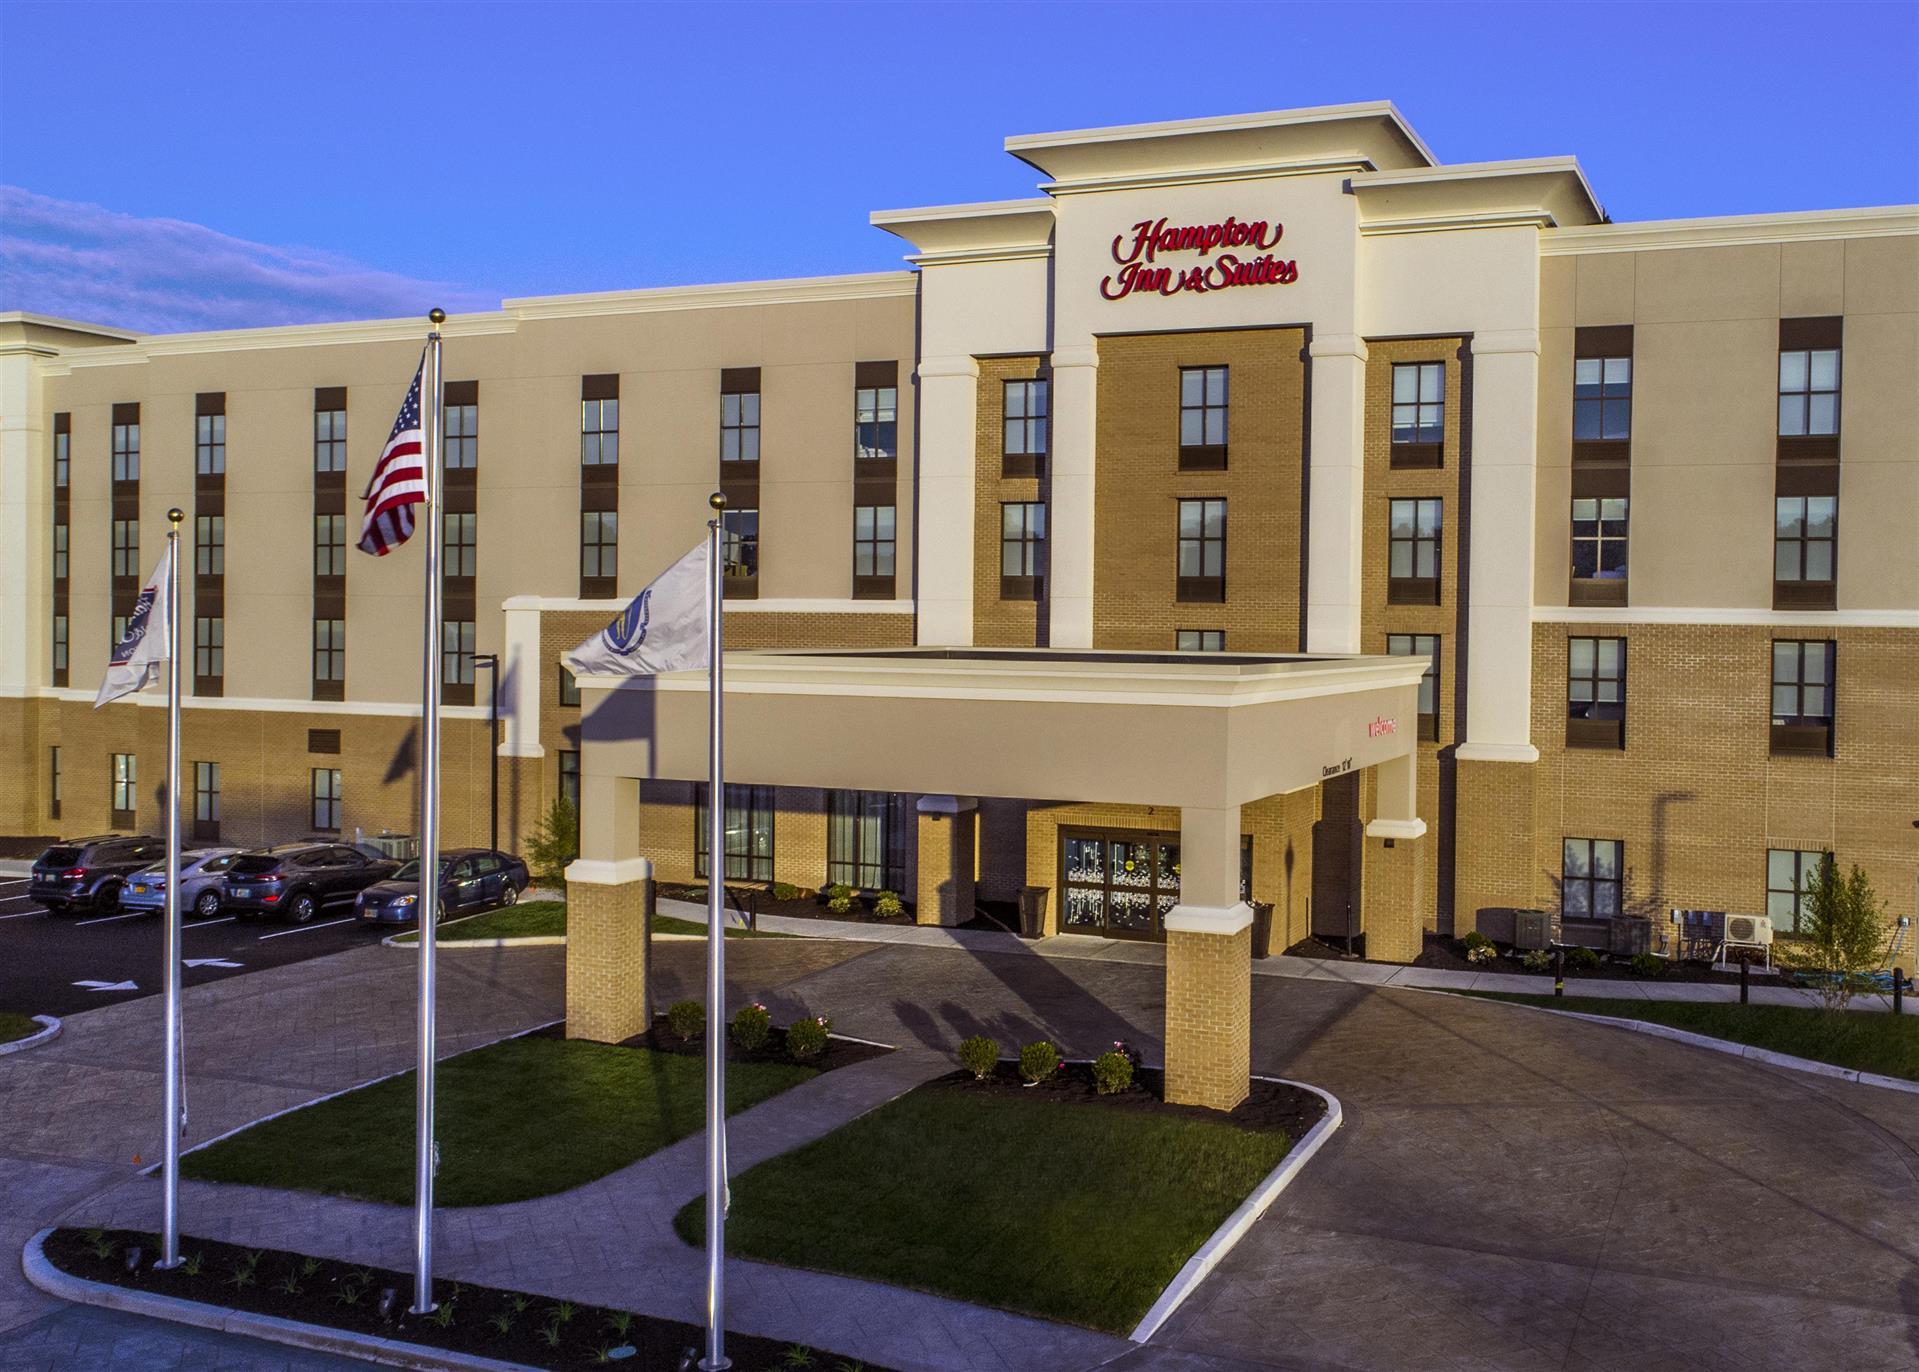 Hampton Inn & Suites Foxborough/Mansfield in Foxborough, MA